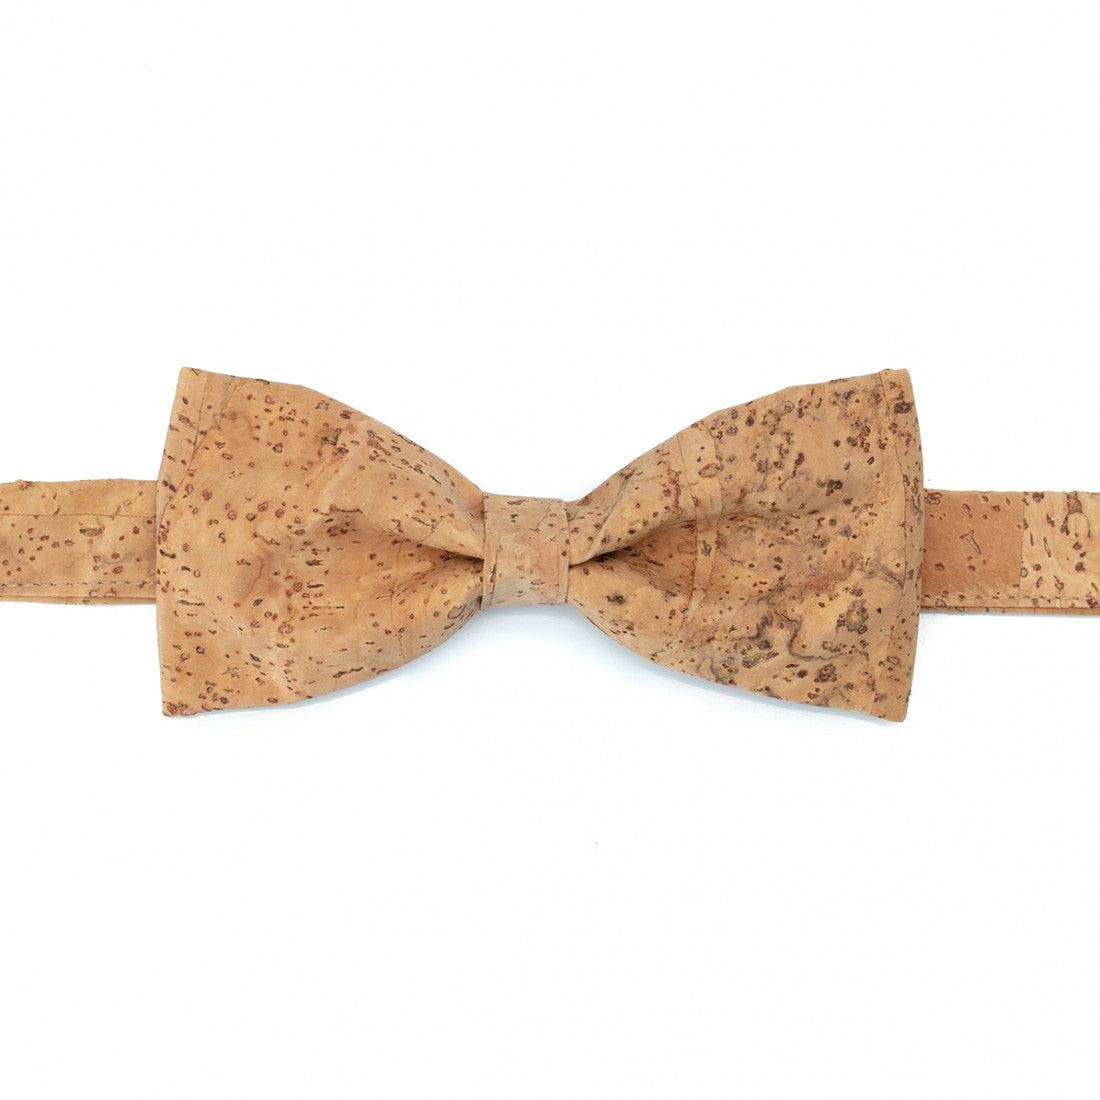 Vegan Cork Bow Tie